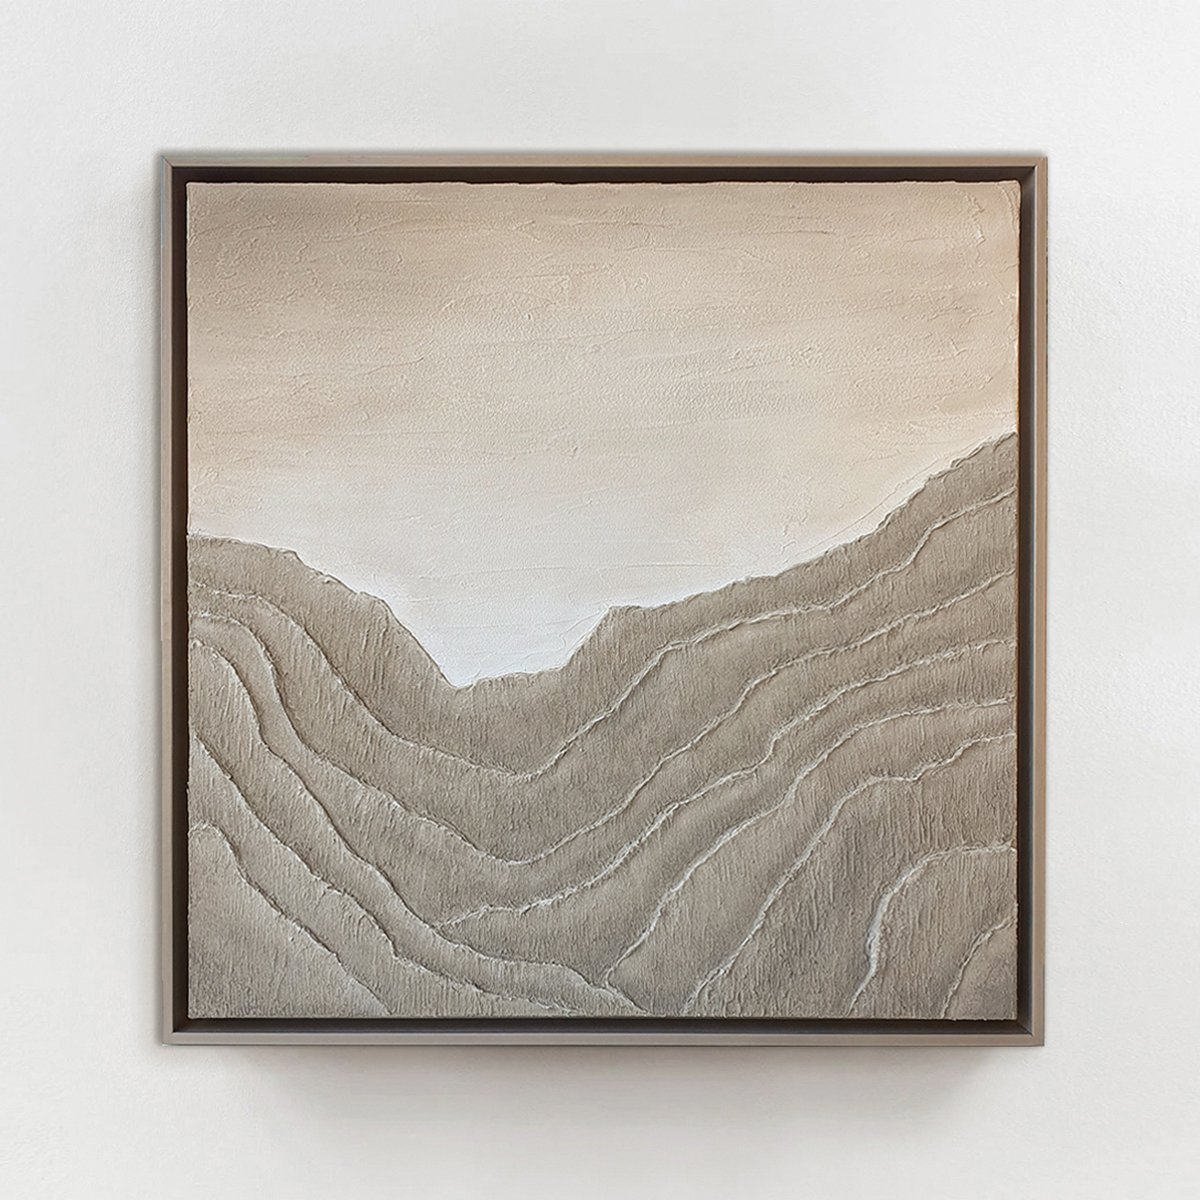 Sand whispers by Cristina Simeoni